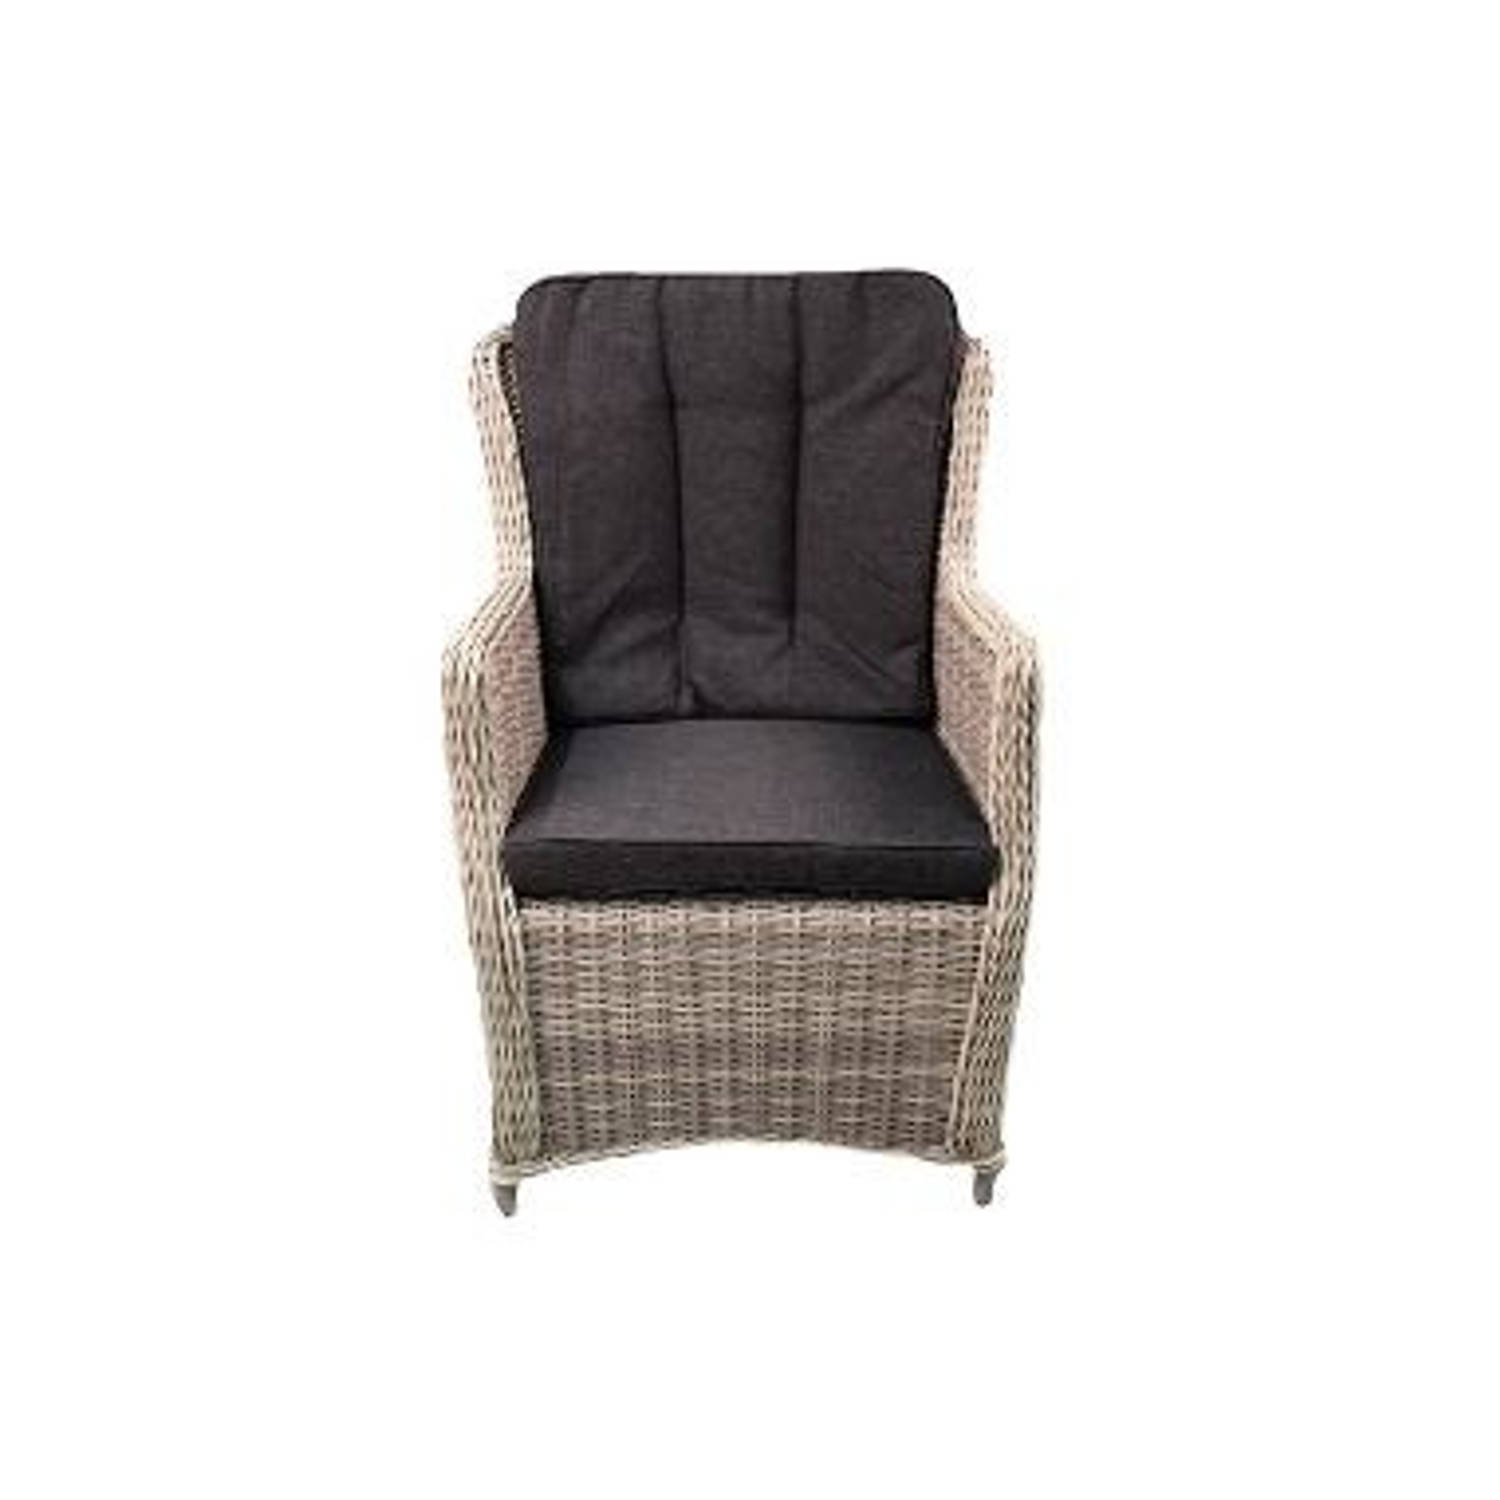 OWN - Canossa Dining stoel incl handgreep Wicker HM15 off white - stof 239